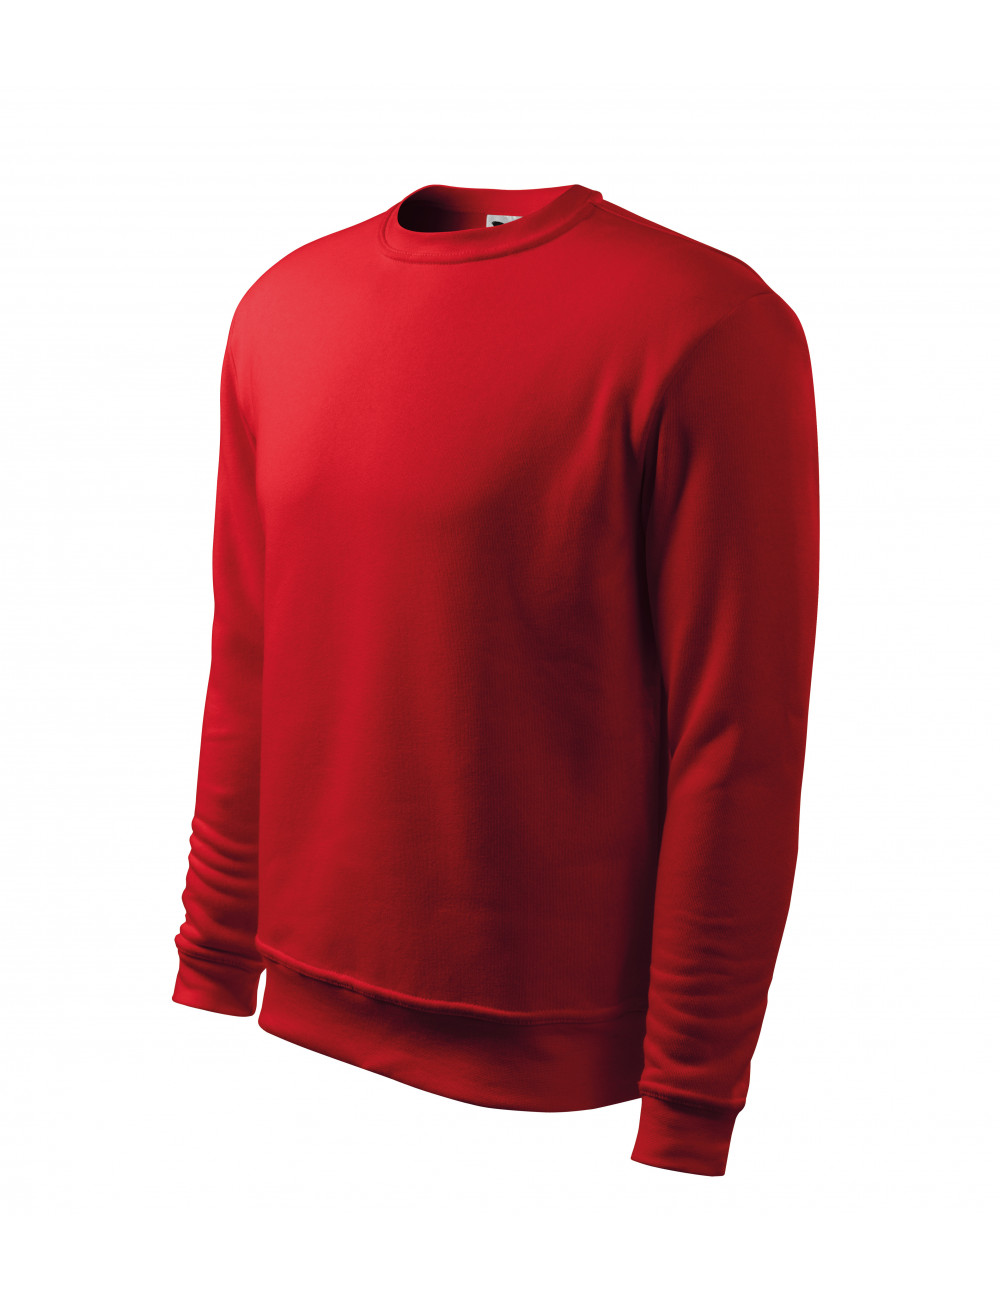 Essential 406 men`s/children`s sweatshirt red Adler Malfini